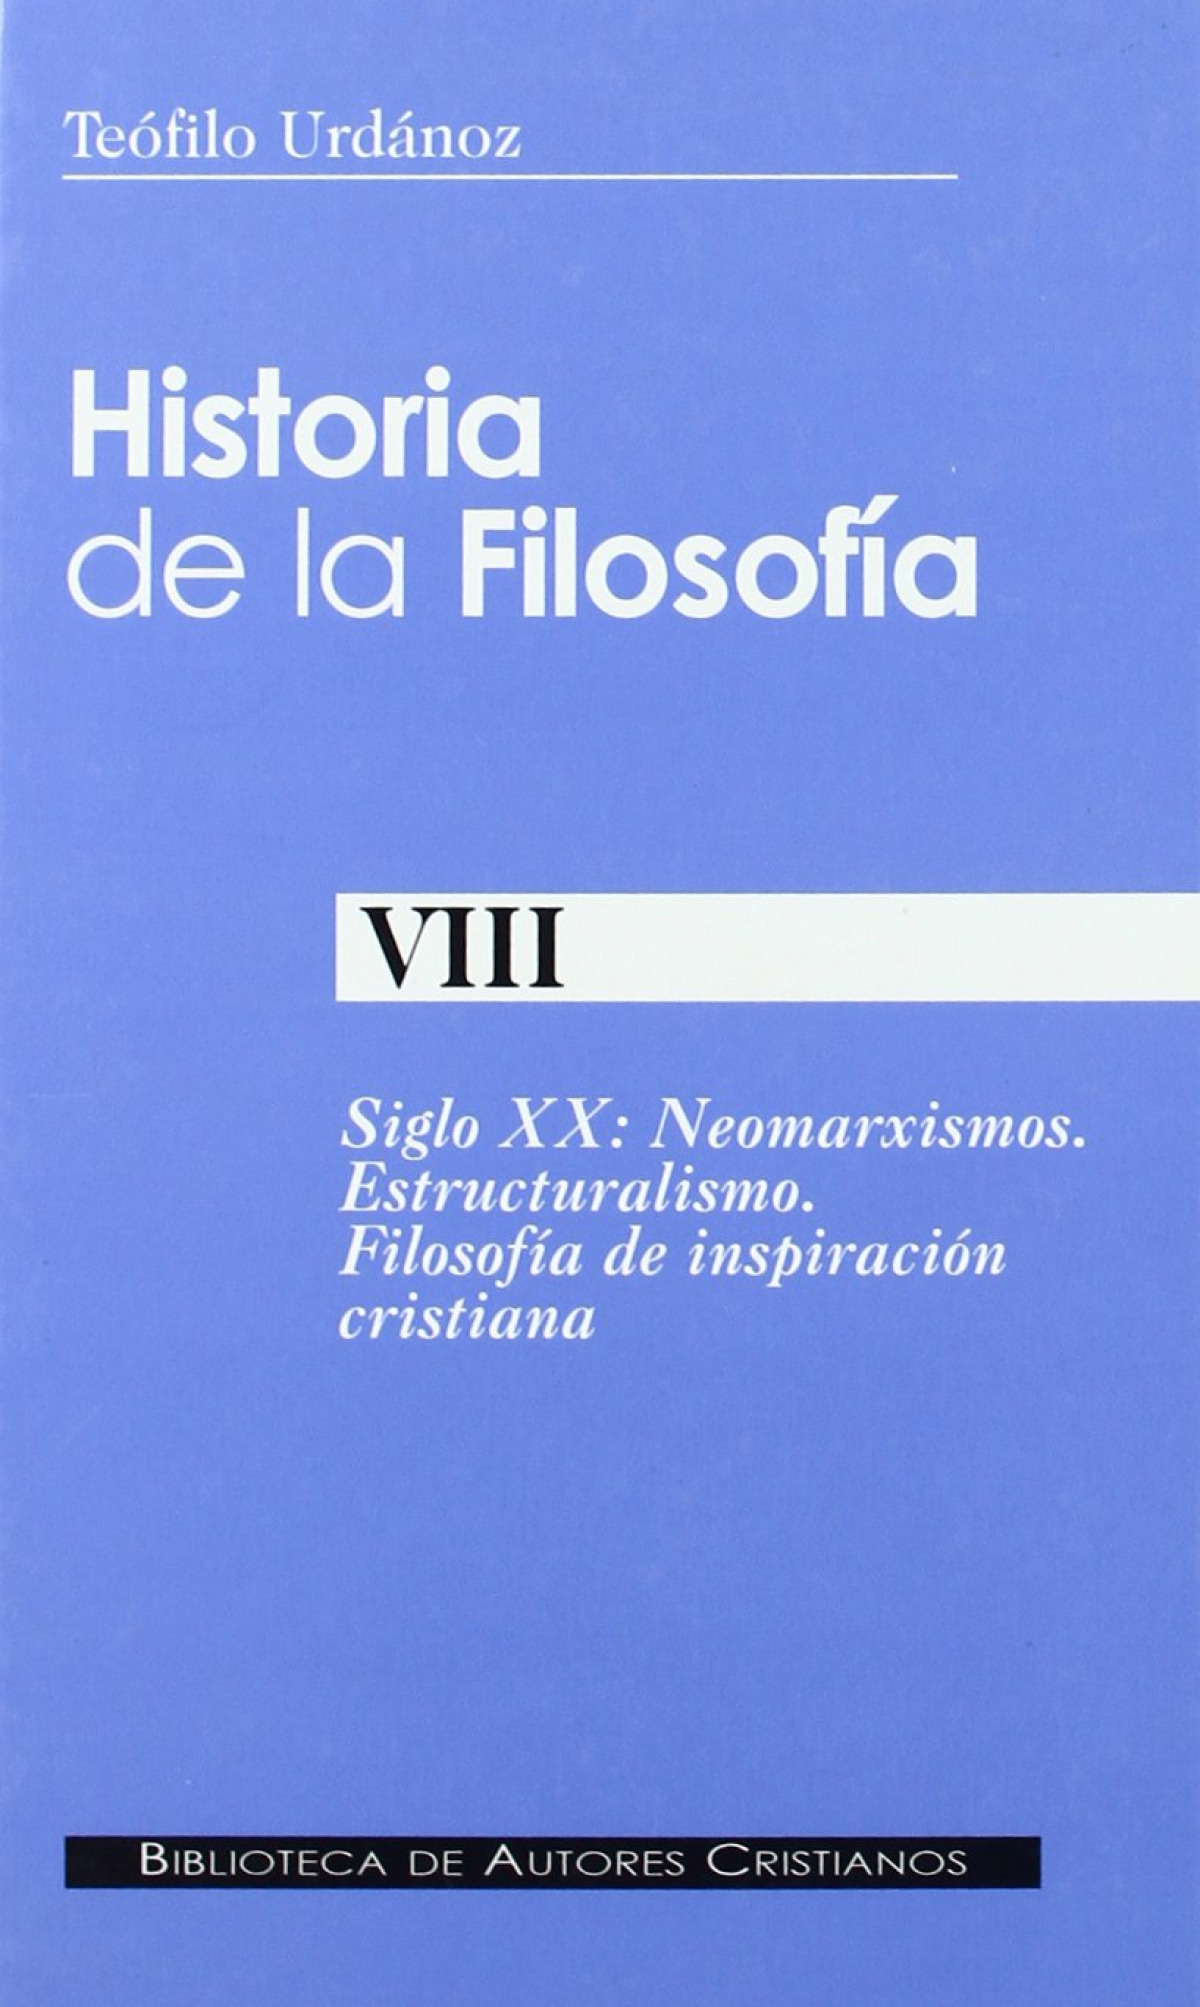 Historia de la FilosofÍa (VIII) Siglo XX: Neomarxismos. Estructuralism - Urdanoz, Teofilo